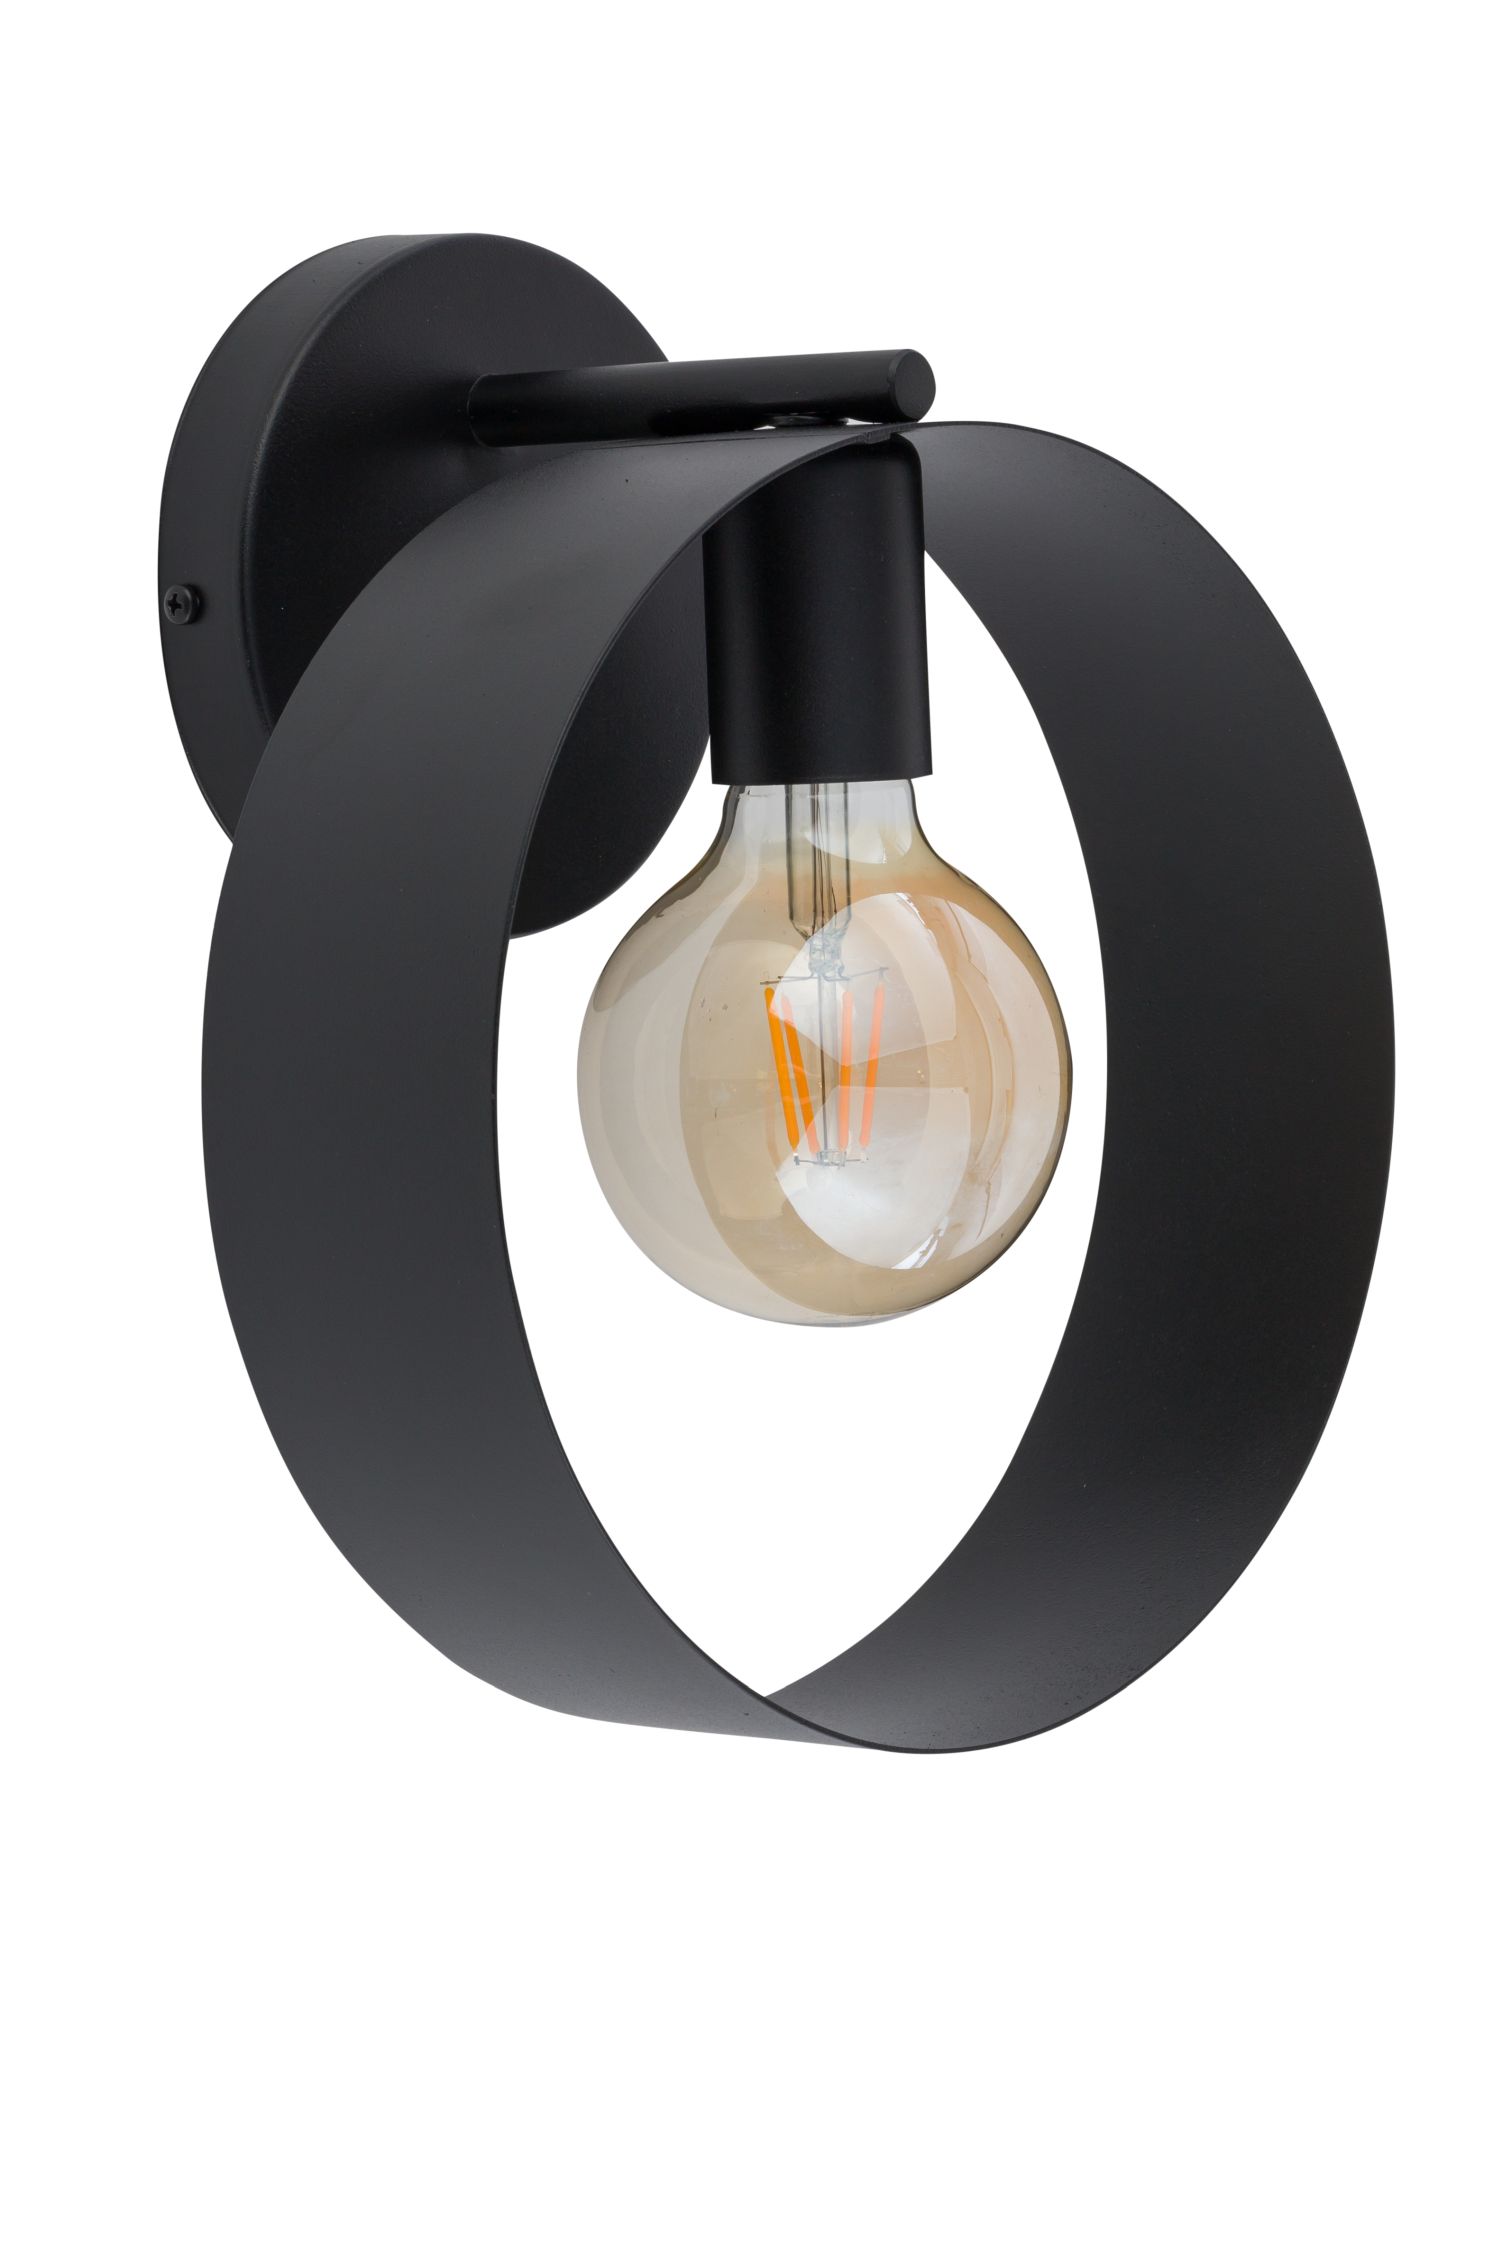 Metall Wandlampe Schwarz Ring Design E27 H:29 cm